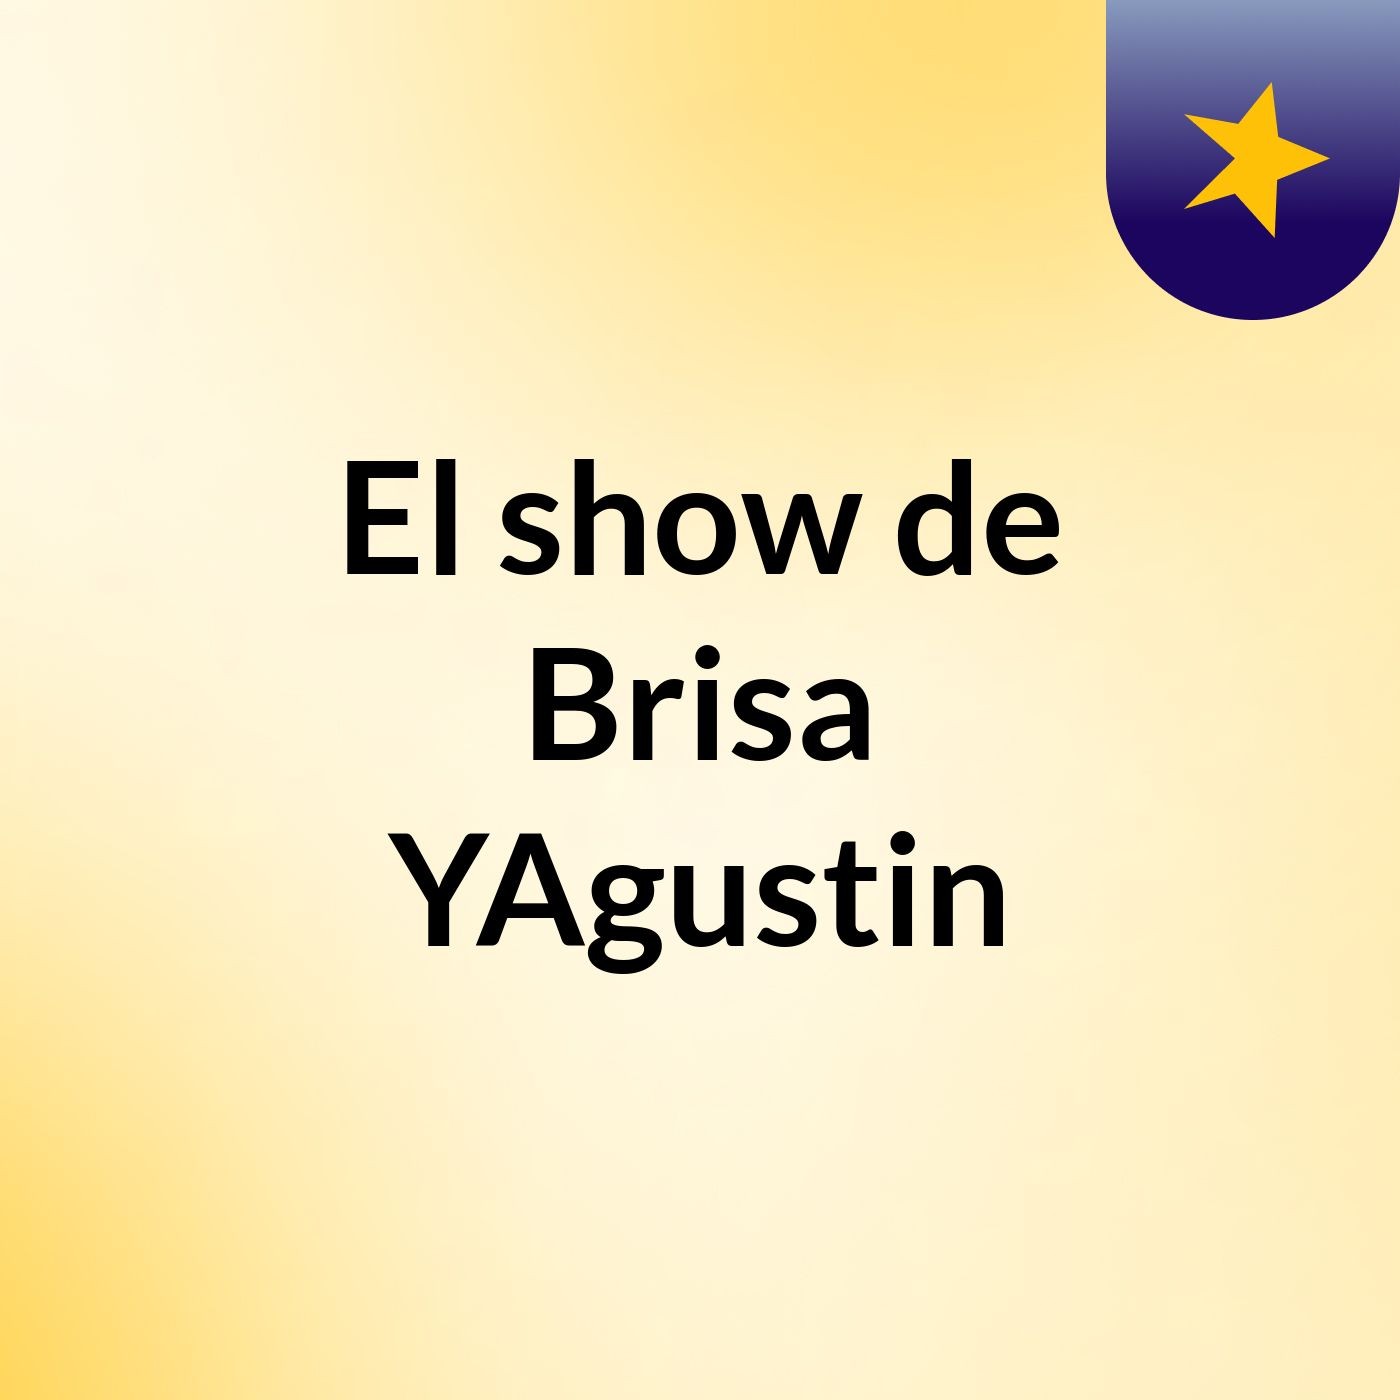 El show de Brisa YAgustin